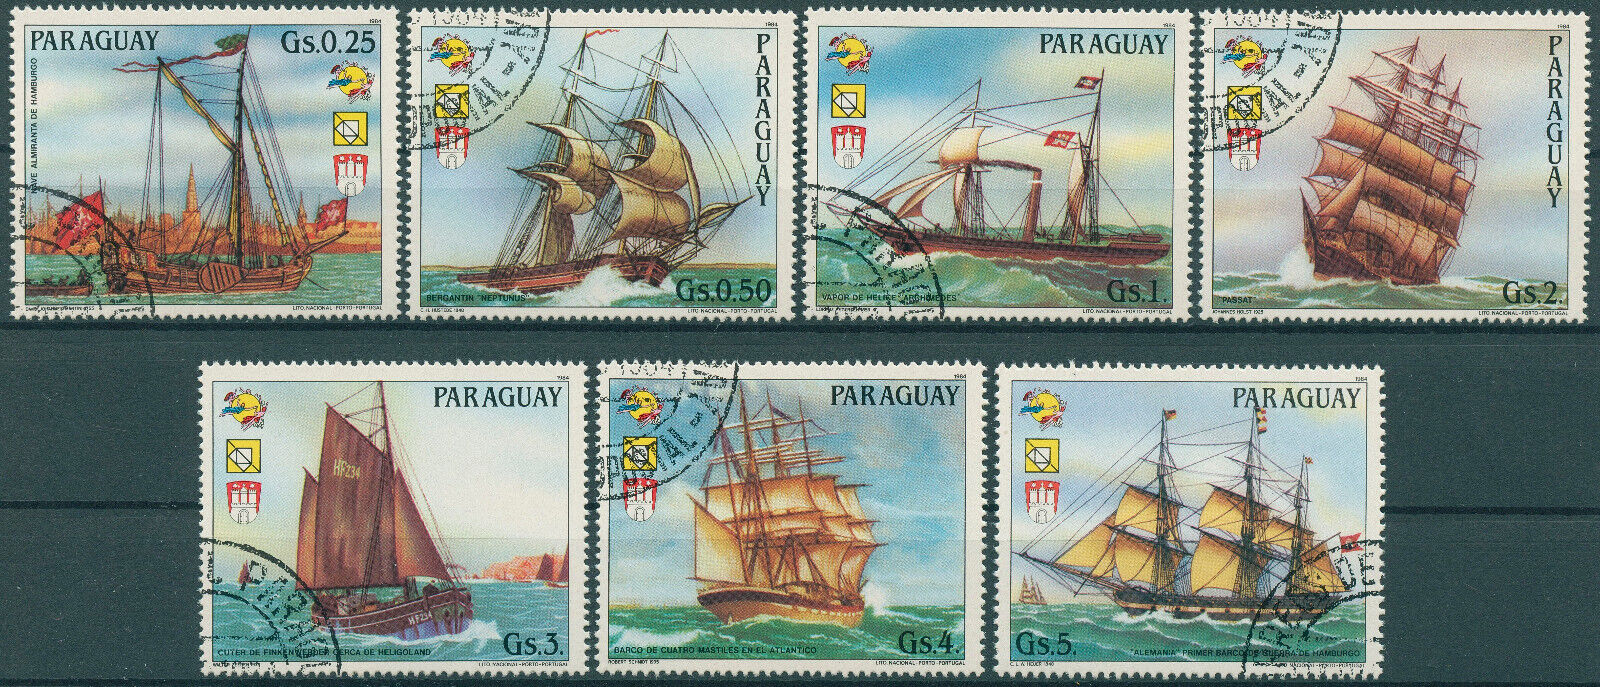 Paraguay 1984 CTO Tall Ships Stamps Sailing Vessels UPU Congress Nautical 7v Set